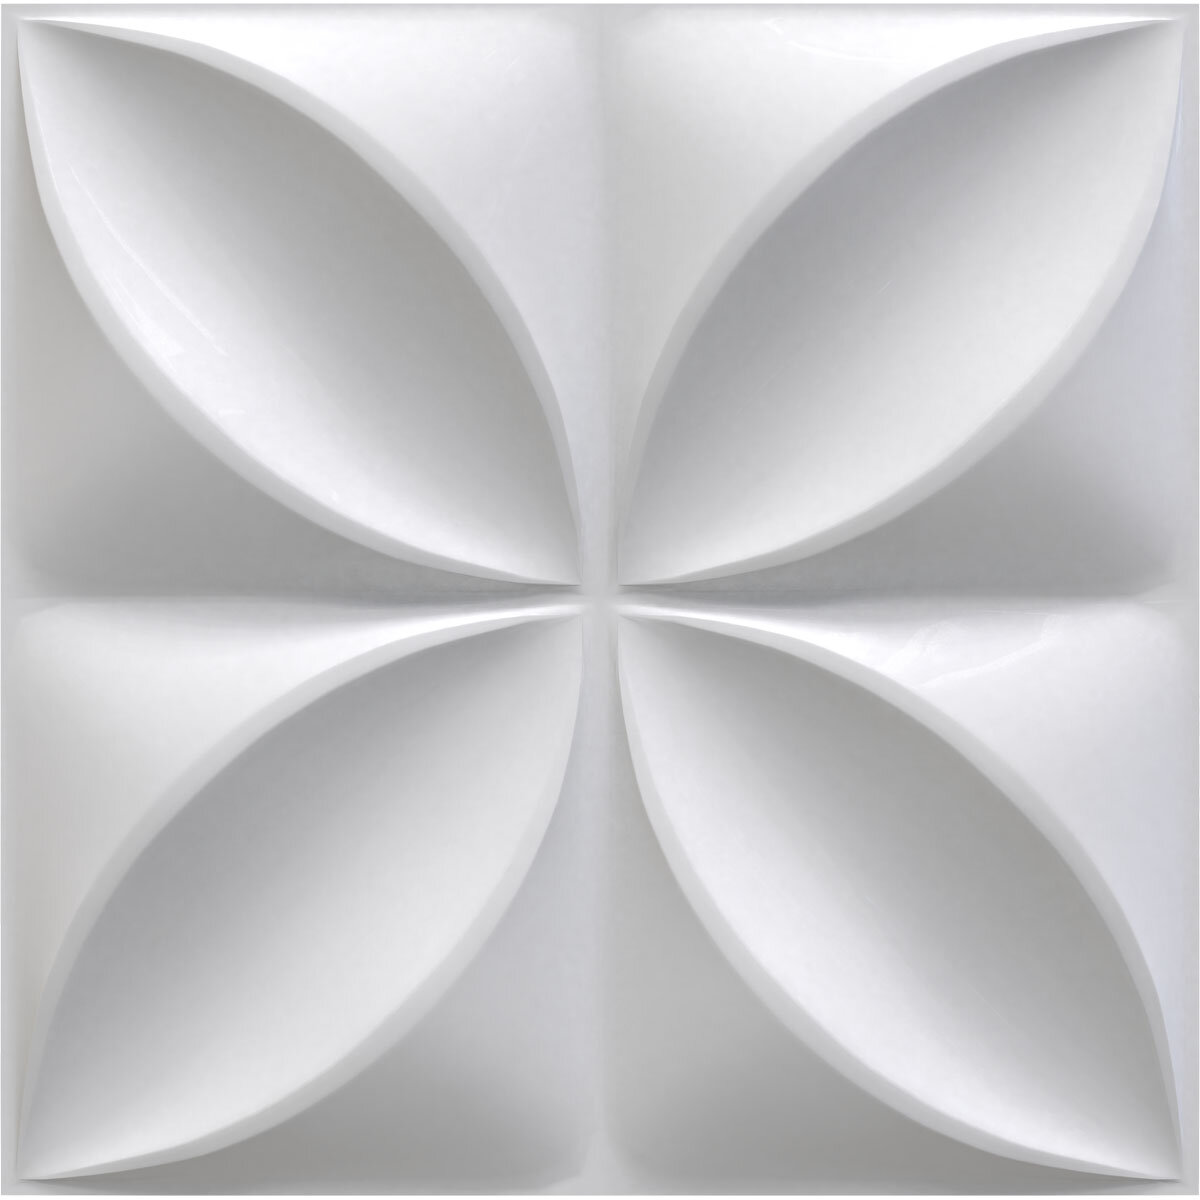 Ekena Millwork Alexa 3d Decorative 19 5 8 X 19 5 8 3d Wall Panel In White Reviews Wayfair